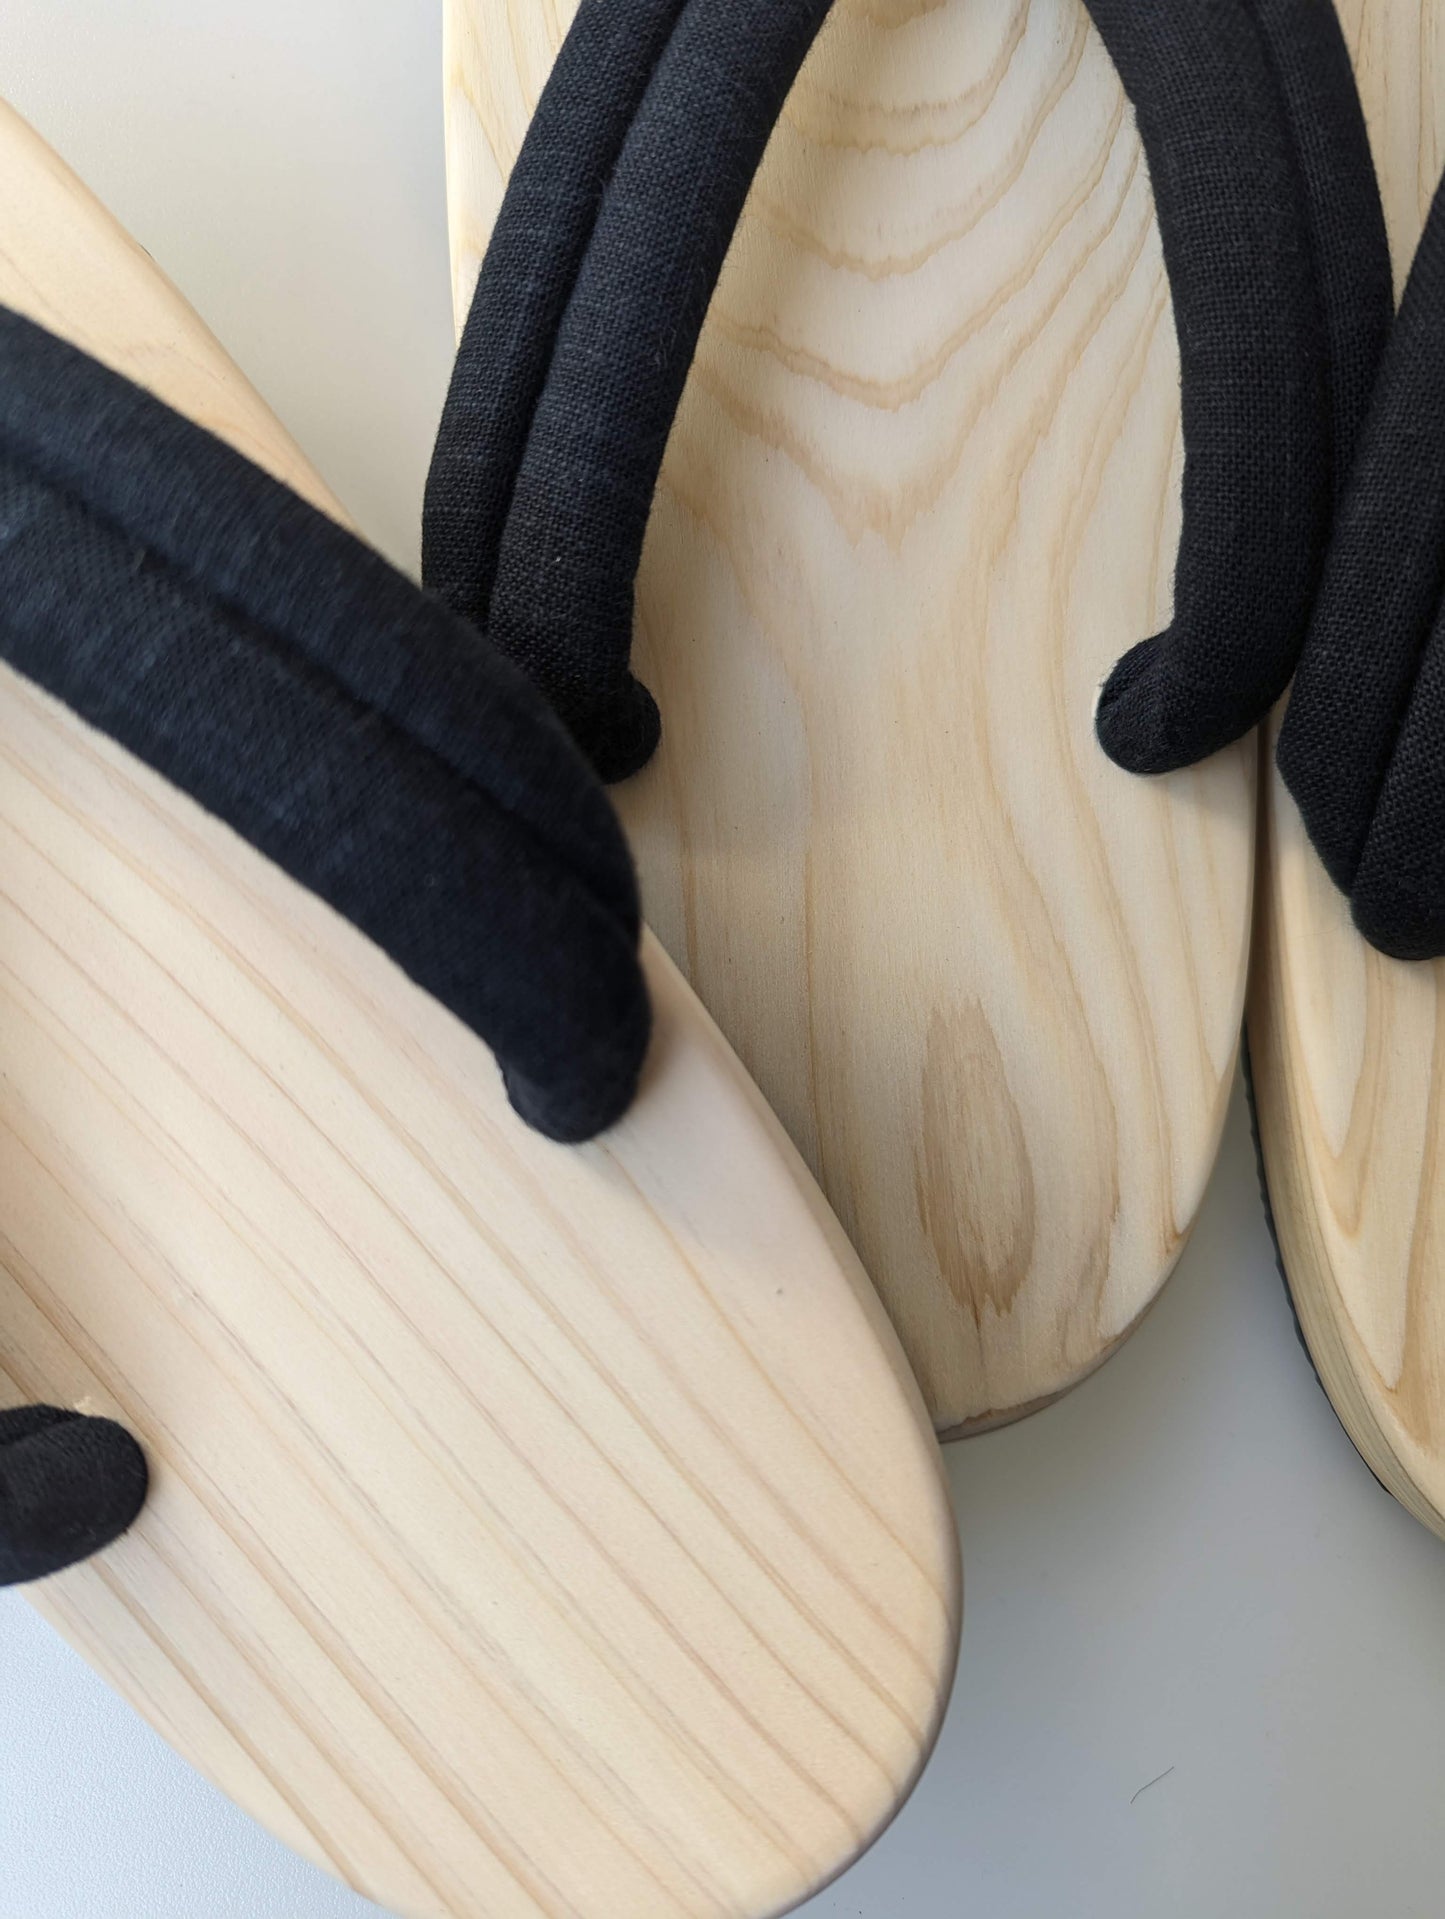 Wood Unpainted Natural GETA ZOURI Slippers [Outdoor]